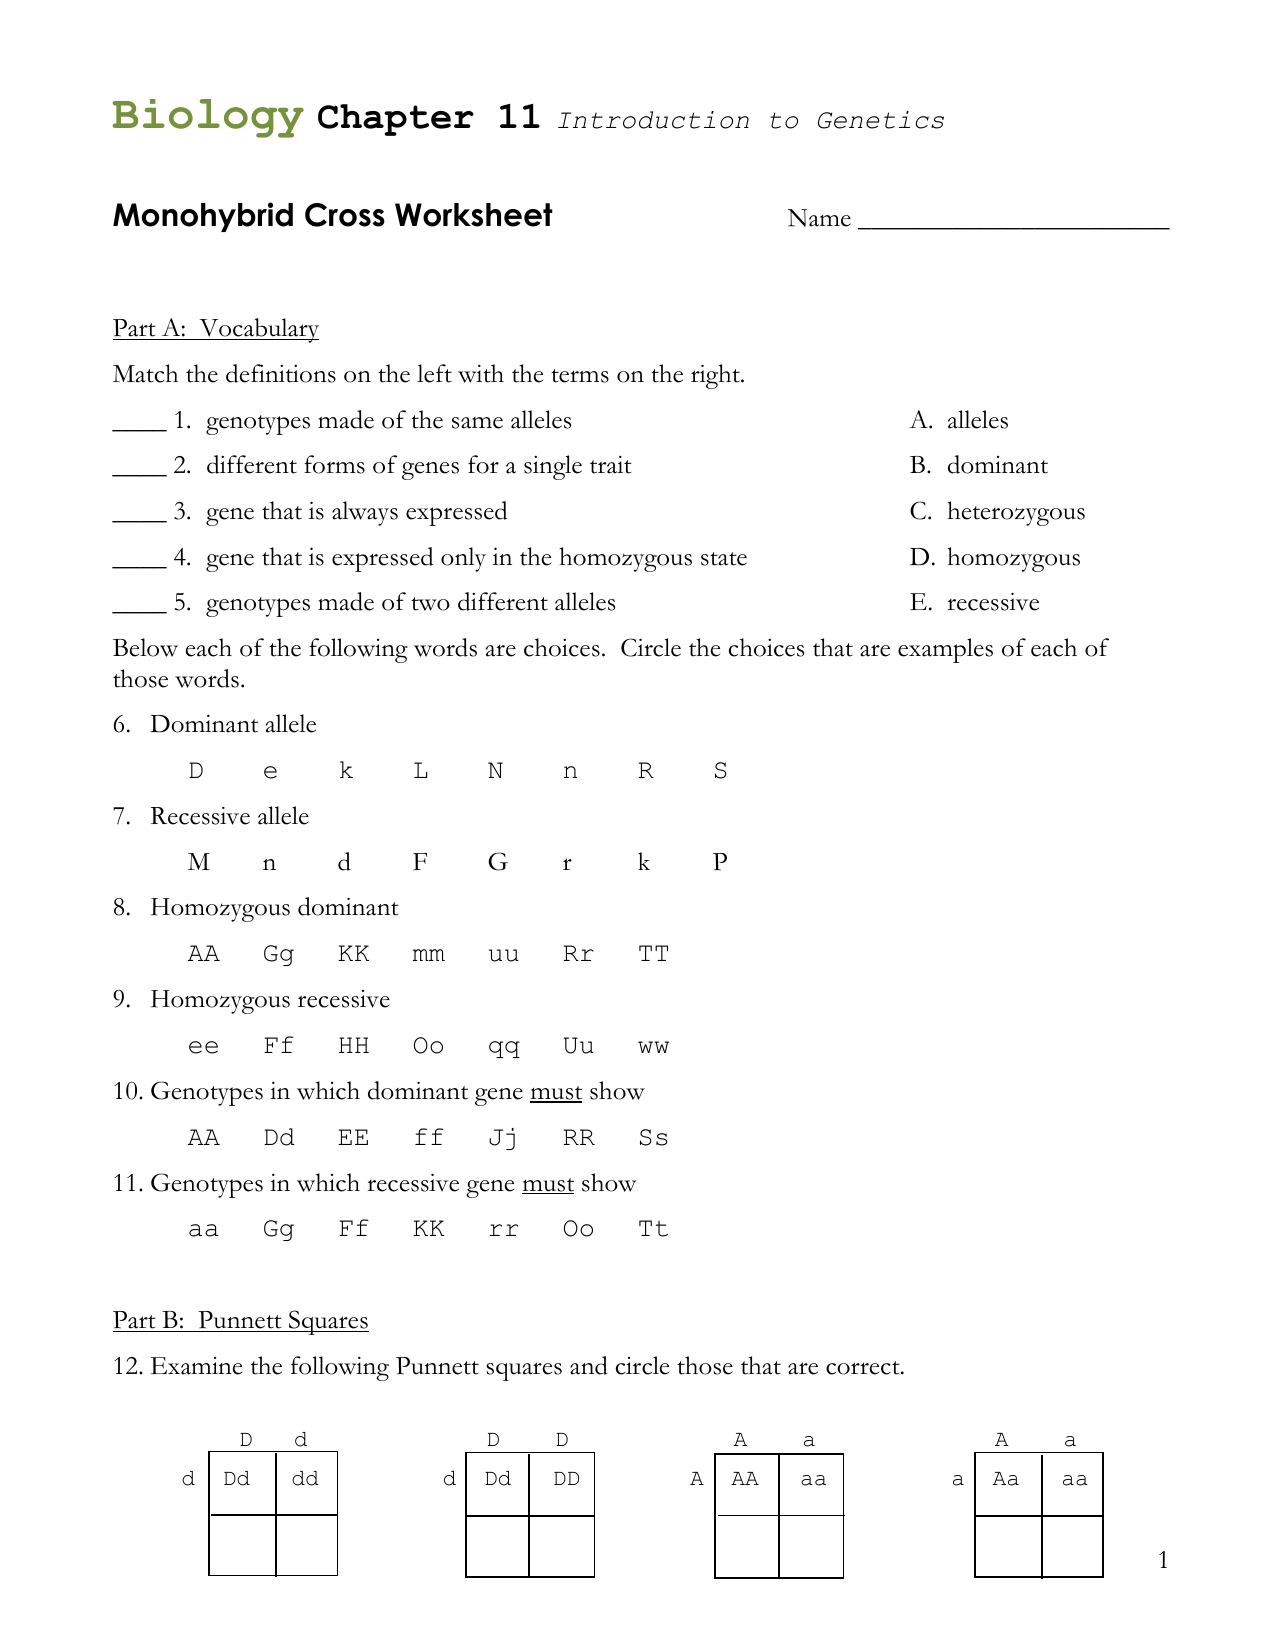 Monohybrid Crosses Practice Worksheet Answer Key - Nidecmege Inside Monohybrid Cross Worksheet Answers